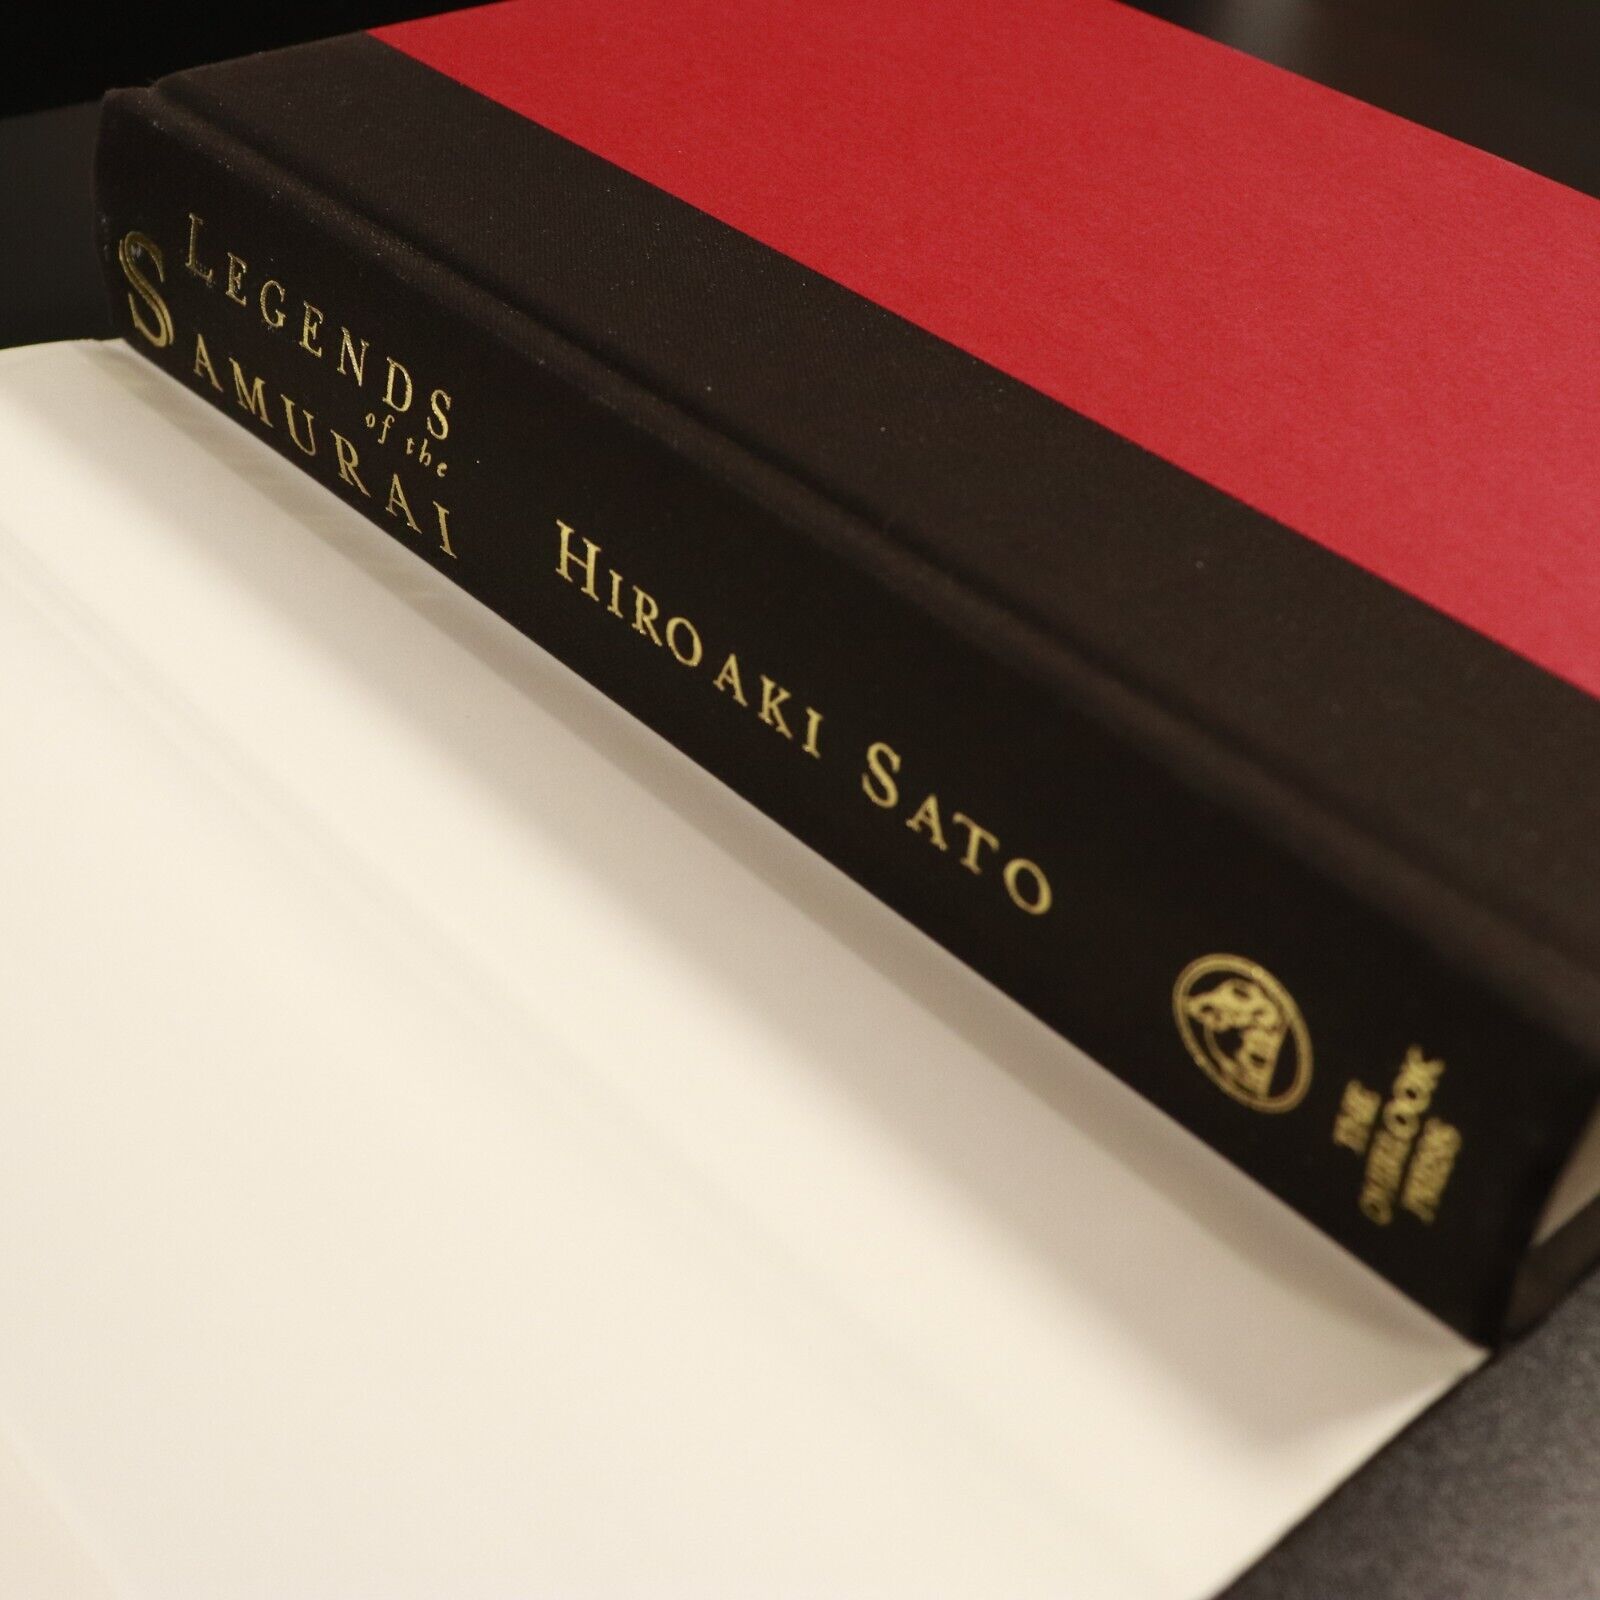 1995 Legends Of The Samurai by Hiroaki Sato Japanese History Of The Samurai Book